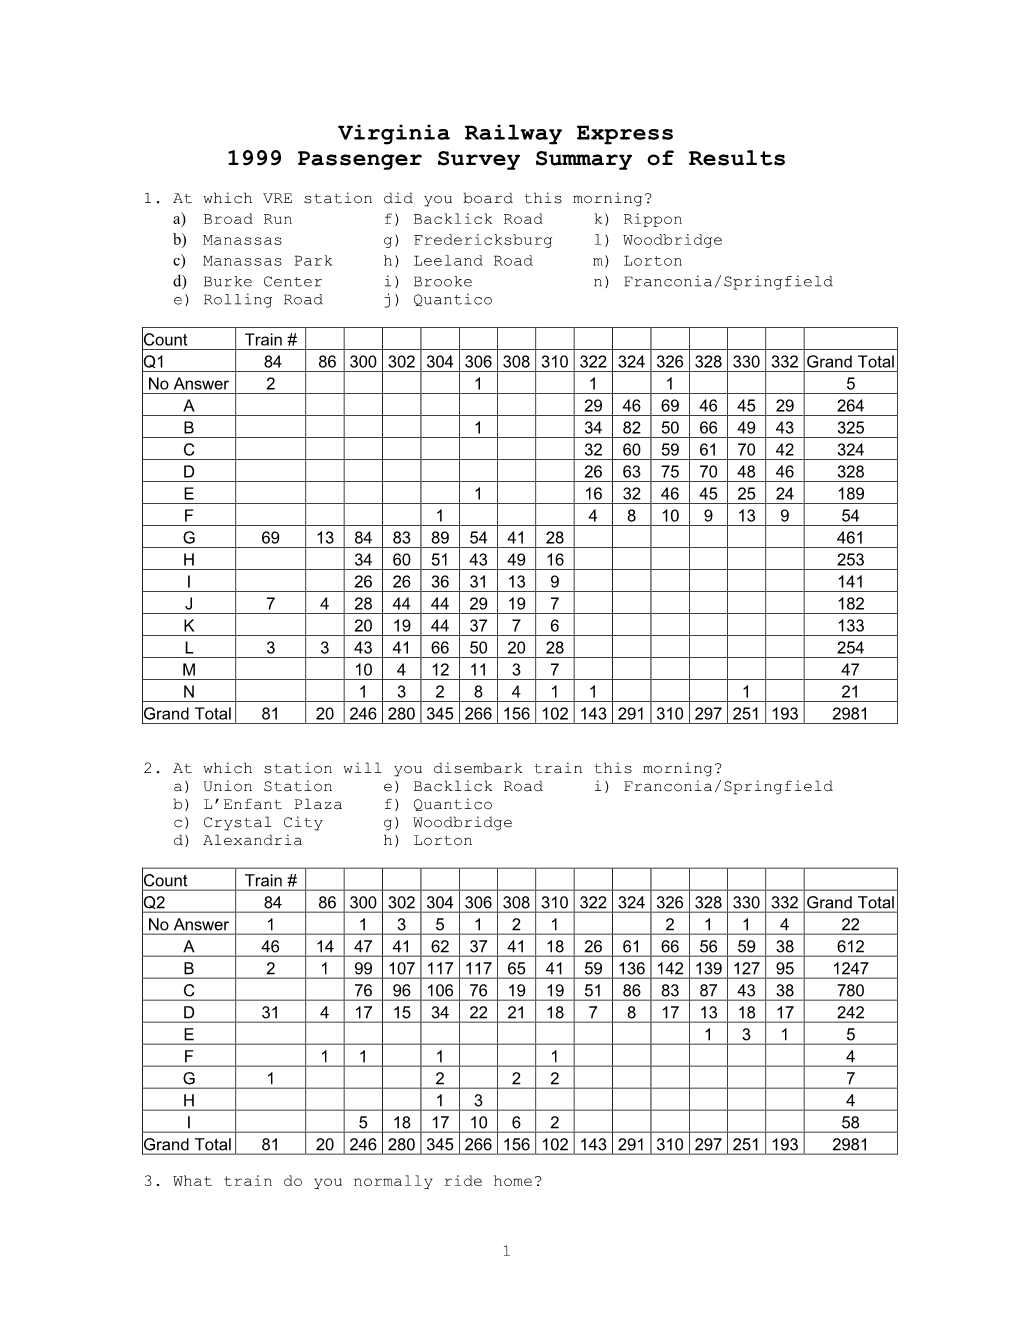 Virginia Railway Express 1999 Passenger Survey Summary of Results